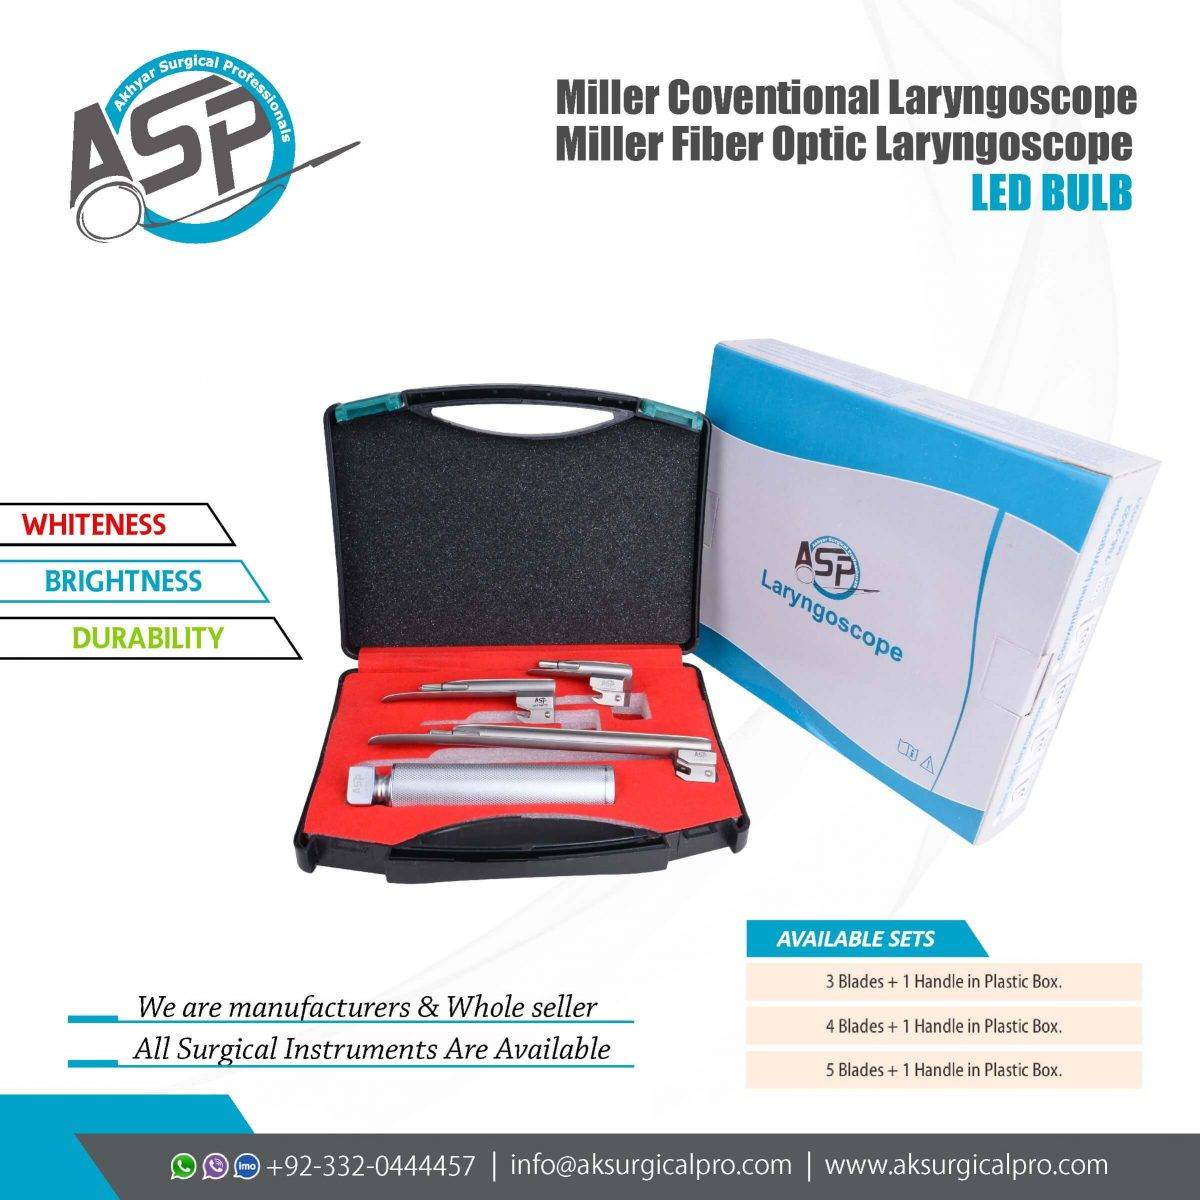 Miller Conventional Laryngoscope